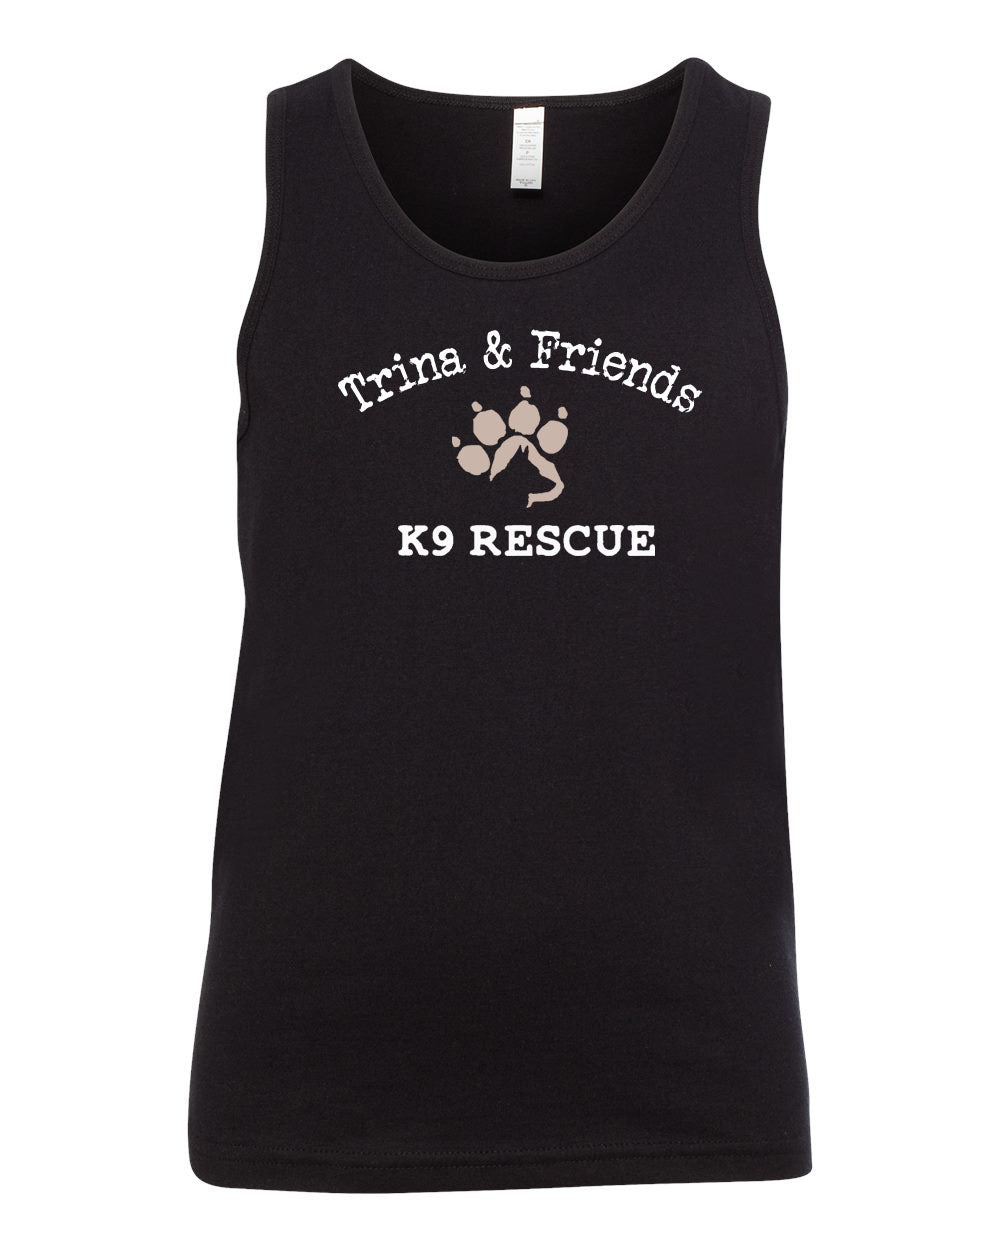 Trina & Friends design 6 Muscle Tank Top